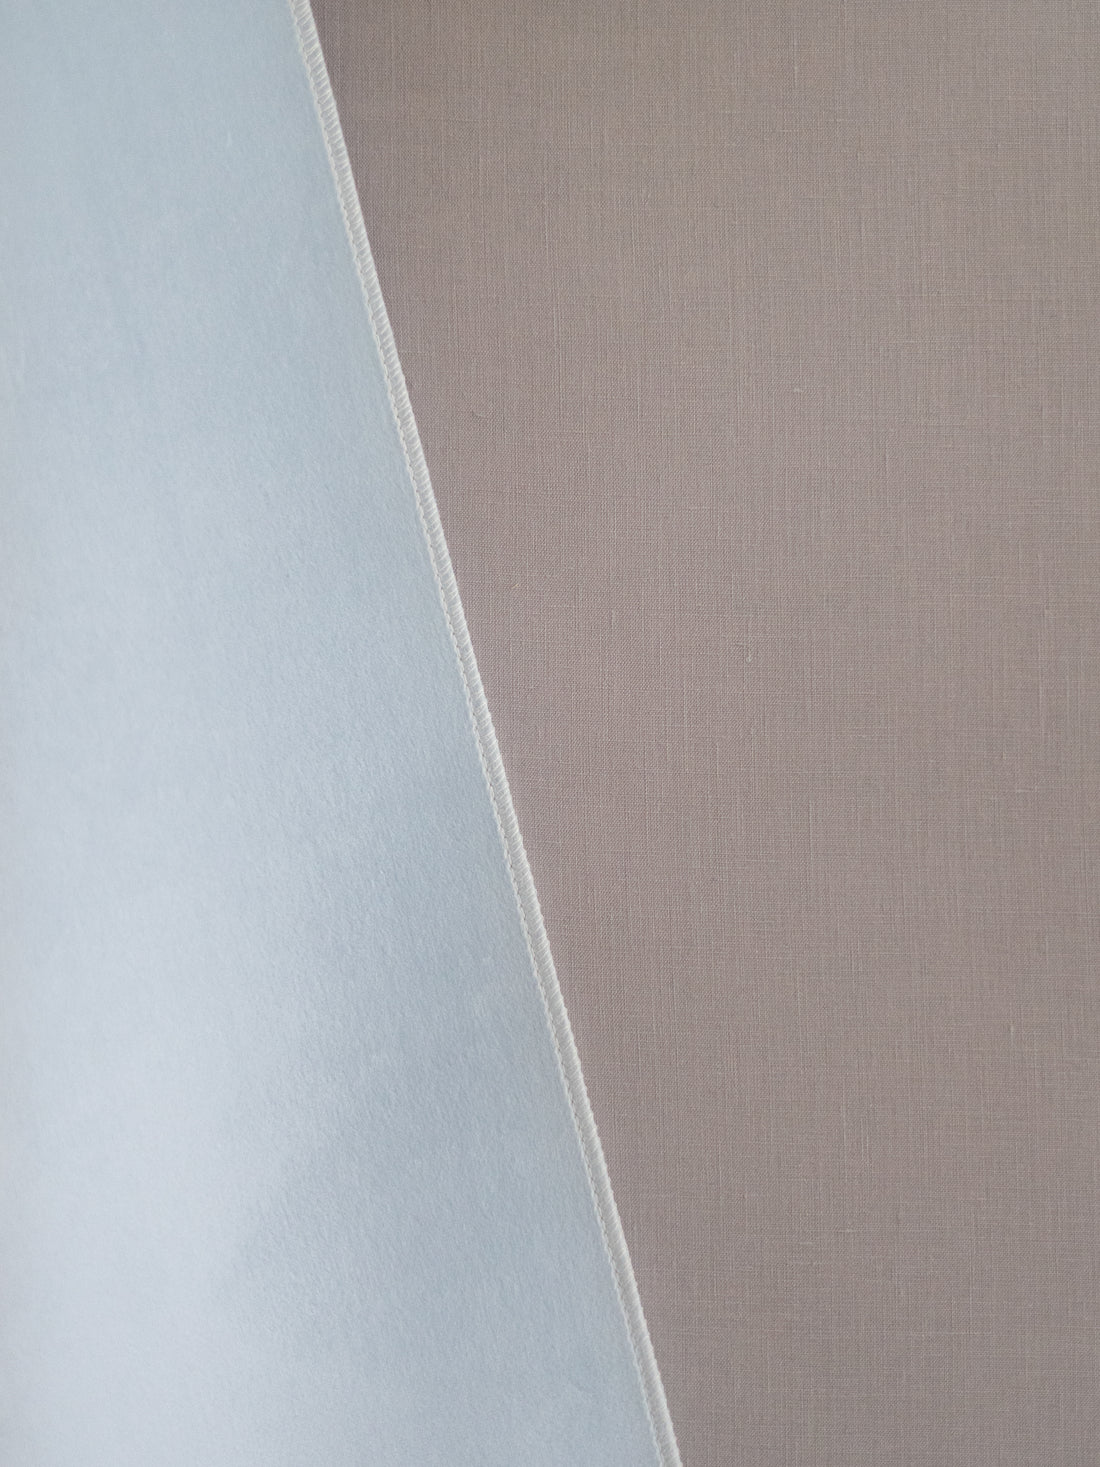 Double Sided Rollable Styling Surface  / Linen (Misty Grey) x Velvet (Light Blue)